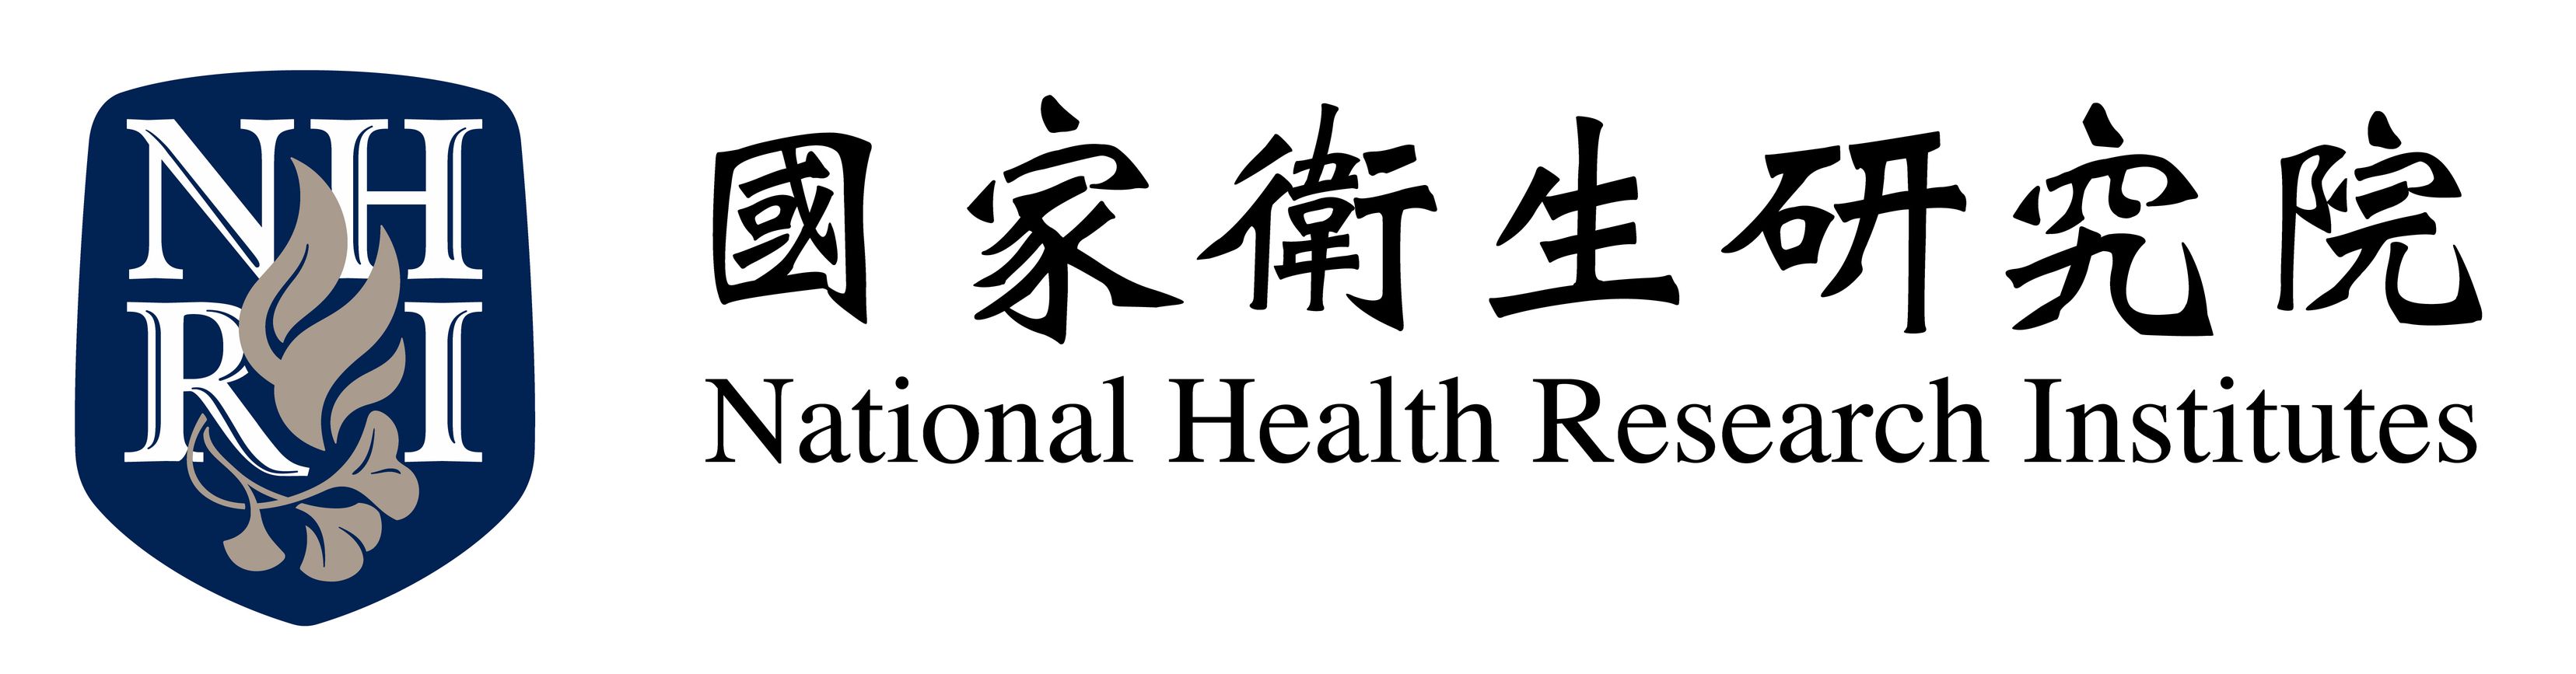 NHRI_Logo.jpg